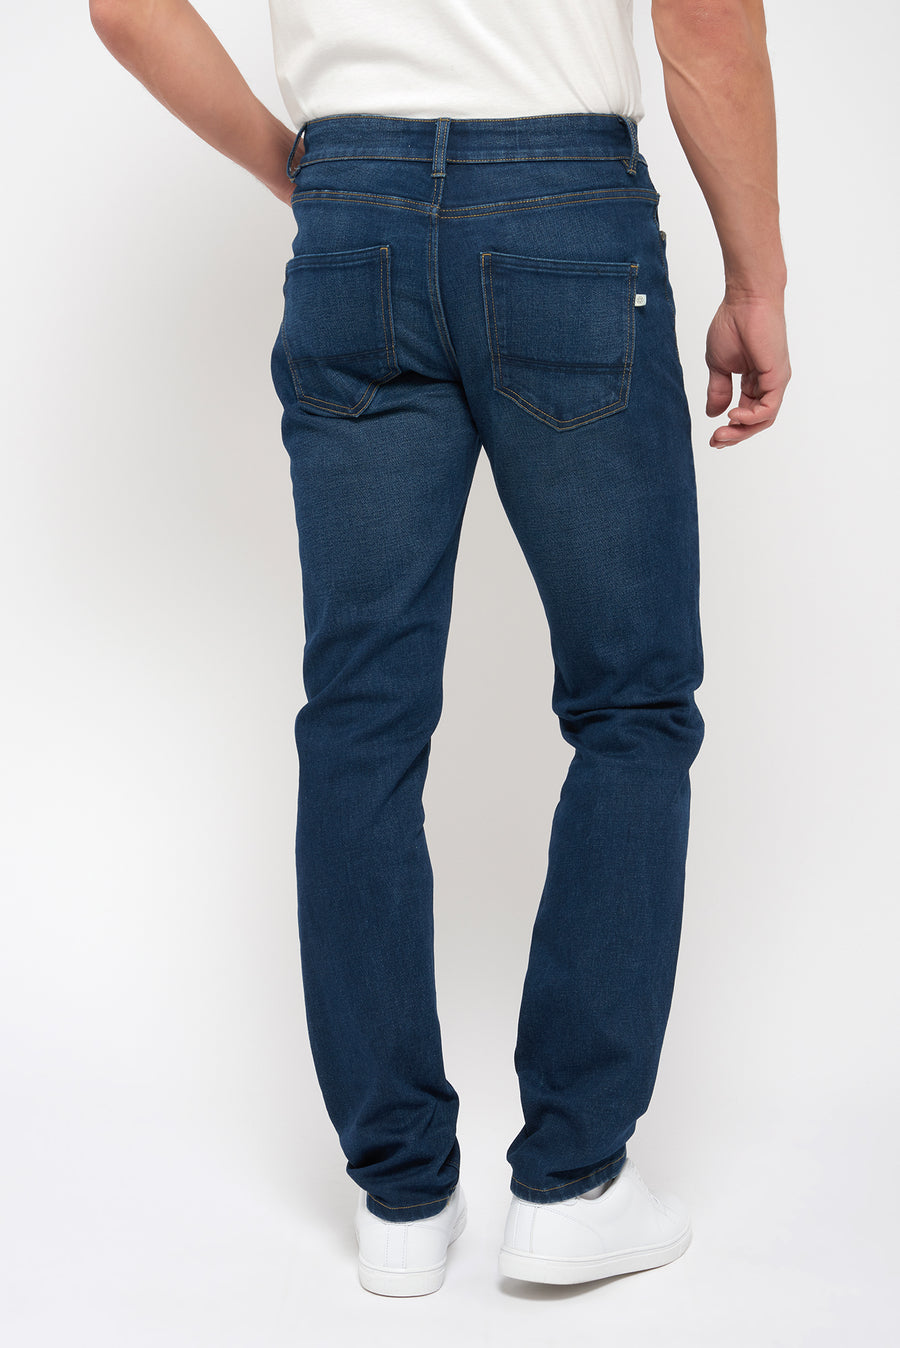 Pantalon jean recyclé - Coupe slim - Ton foncé